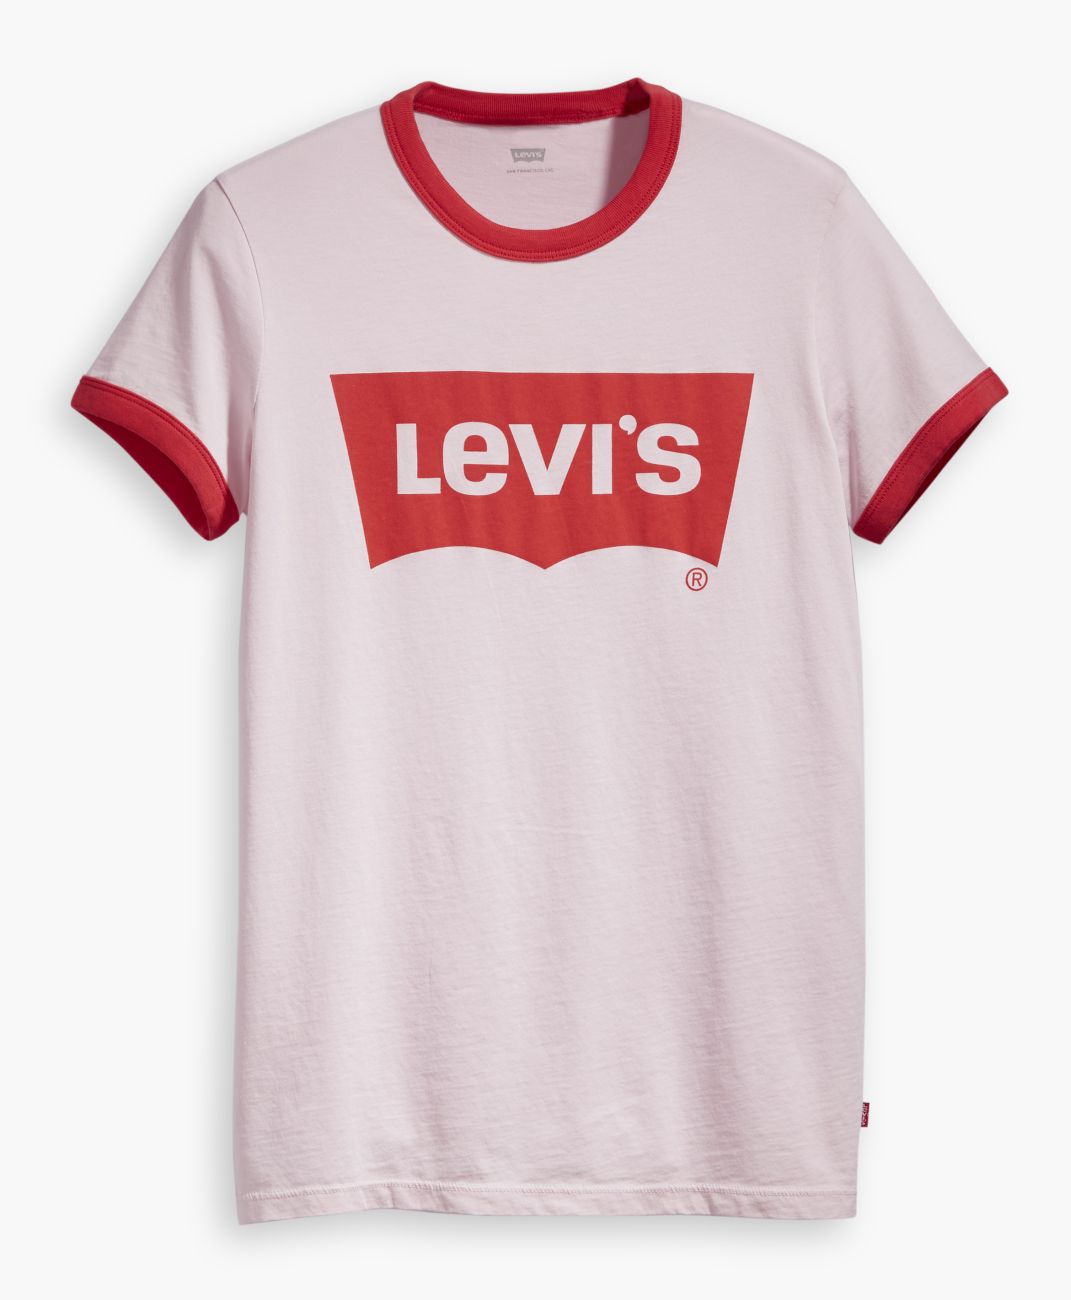 LEVIS Shirts f. Damen T-Shirt 35793-0009 rosa W18-LDT1